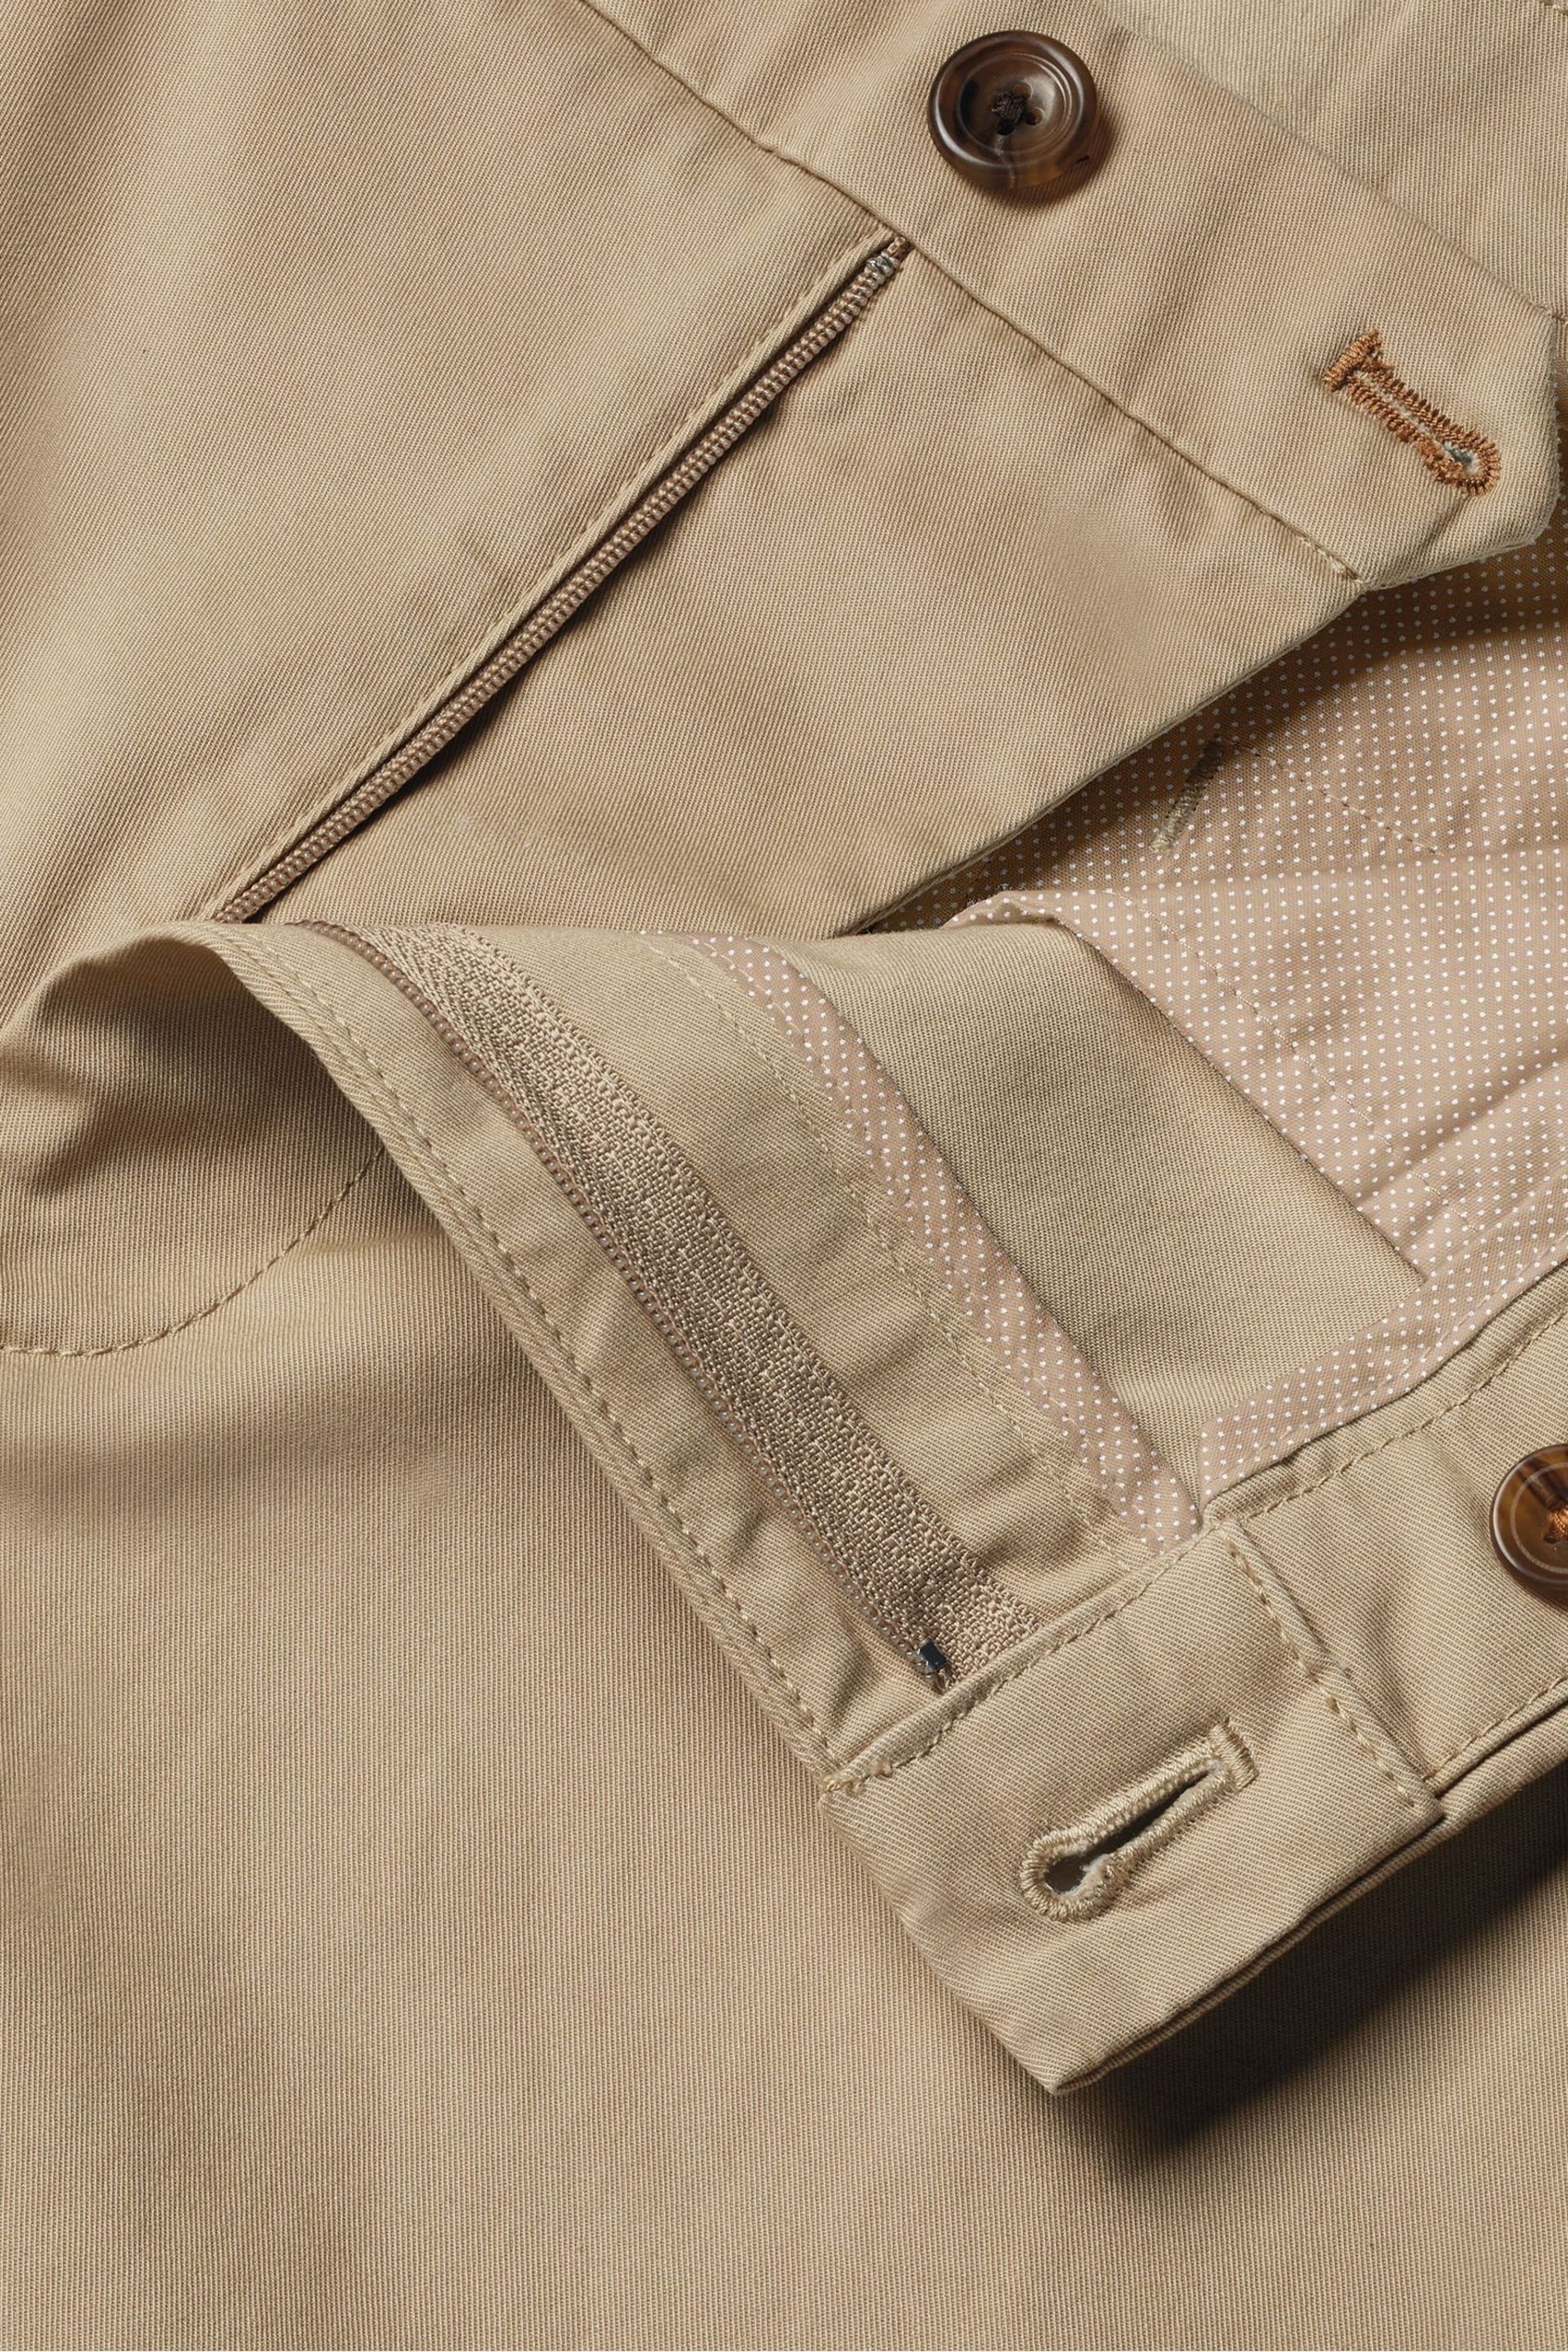 Charles Tyrwhitt Brown Cotton Shorts - Image 6 of 6